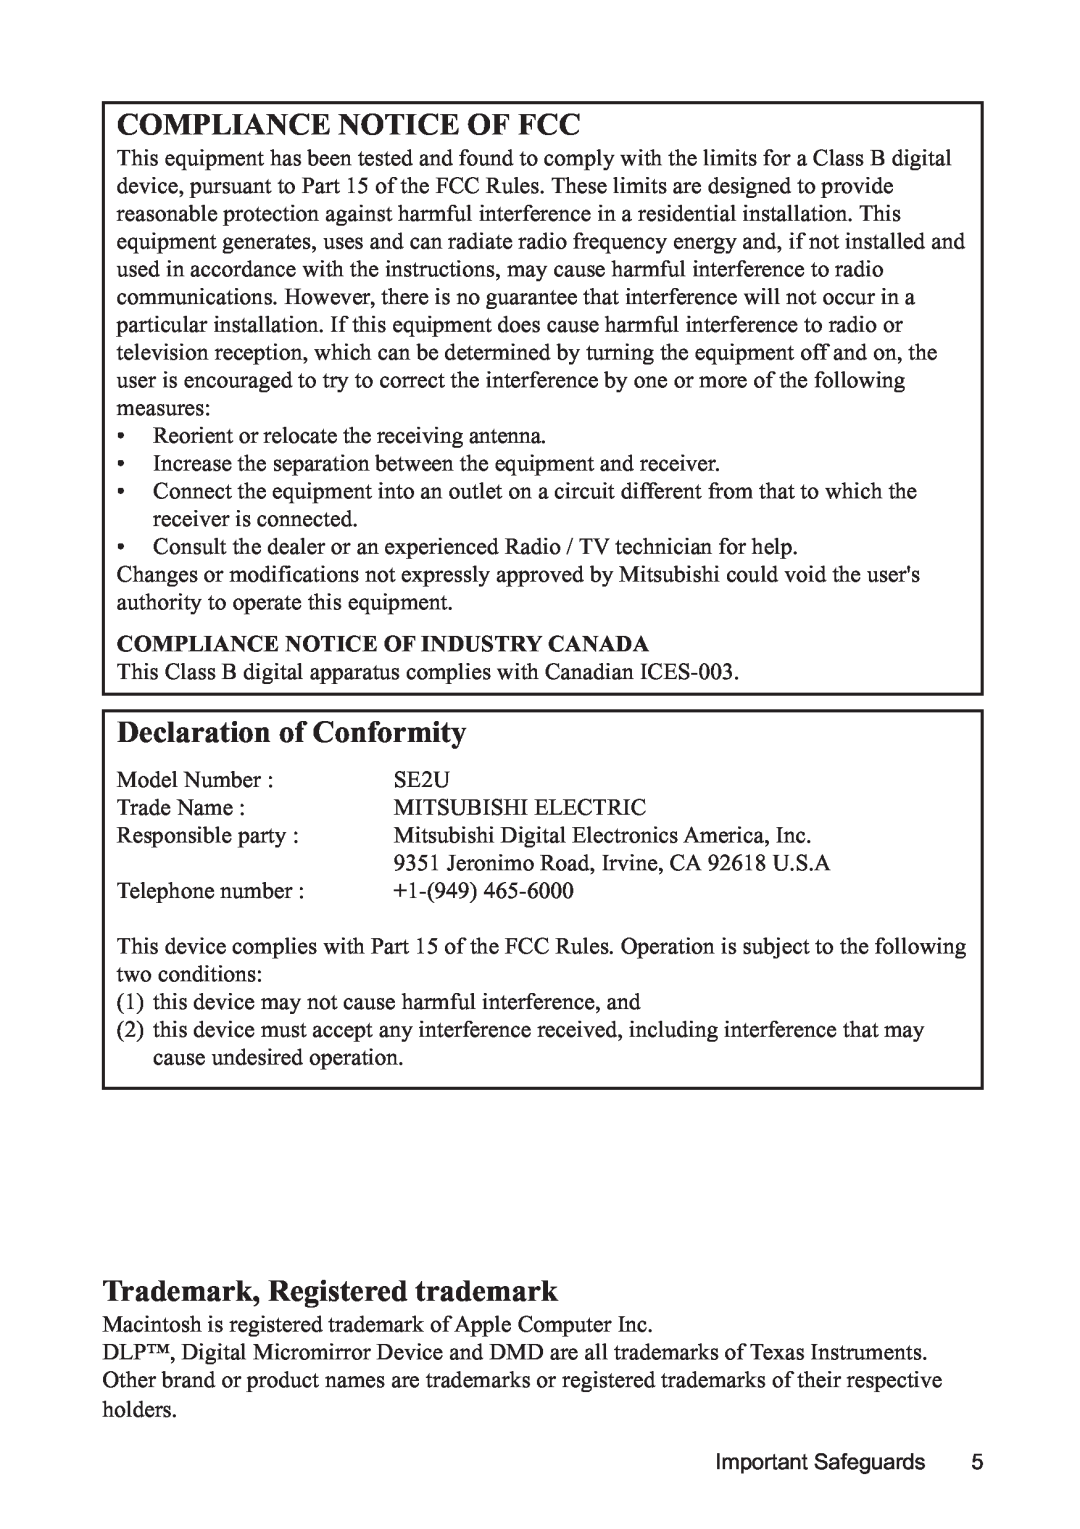 Mitsubishi Electronics SE2U Compliance Notice Of Fcc, Declaration of Conformity, Trademark, Registered trademark 